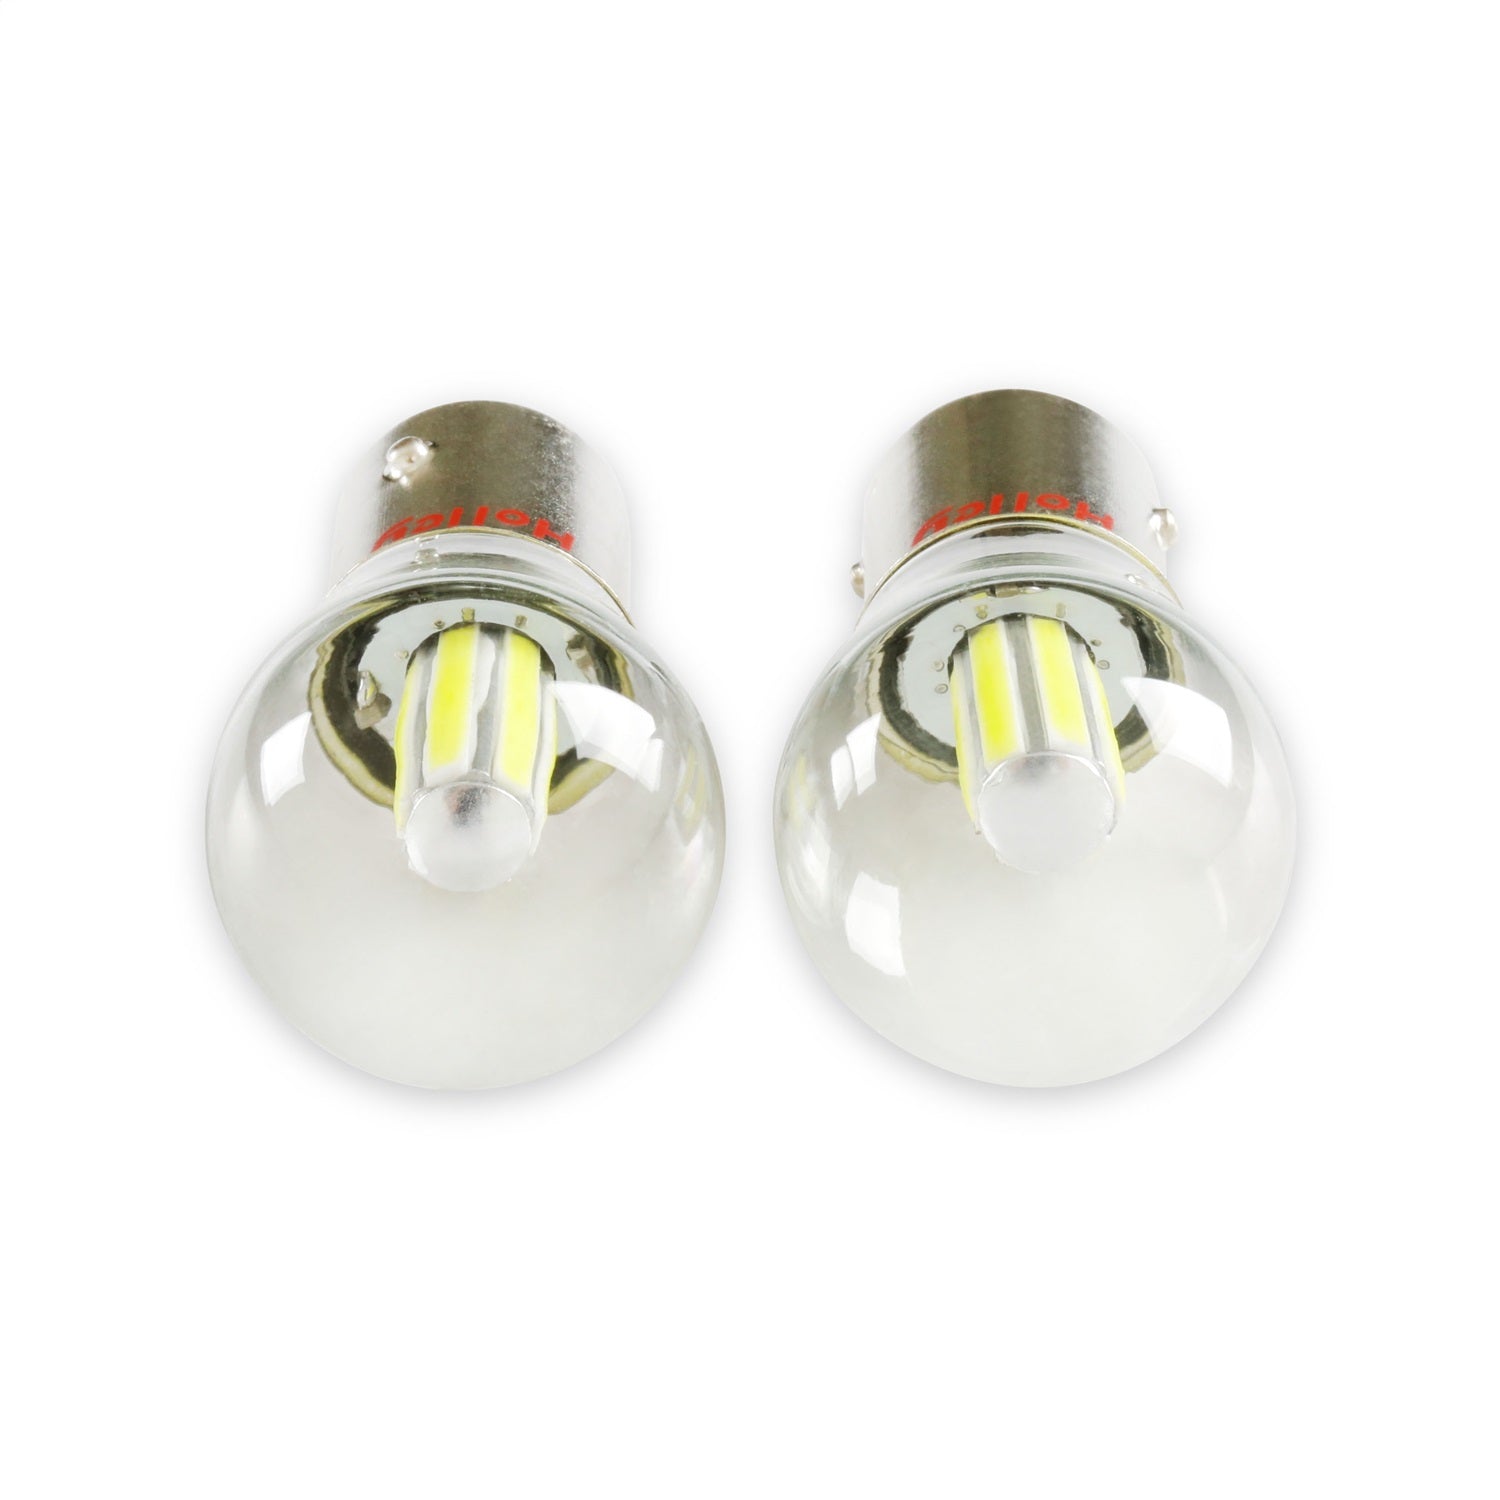 Holley RetroBright Holley Retrobright LED Bulb HLED09